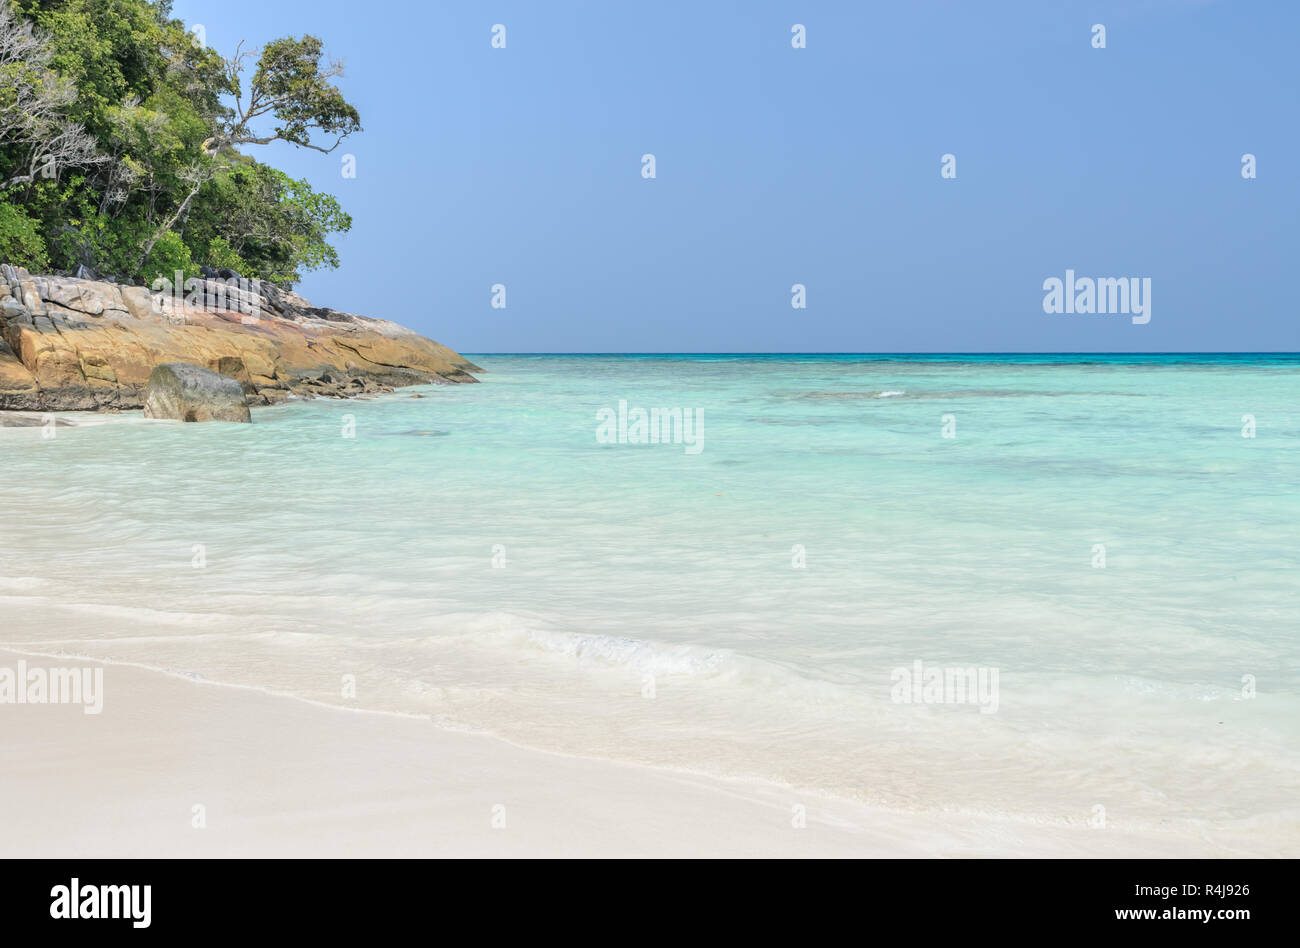 Stunning view of Andaman Sea at Tachai island, Thailand Stock Photo